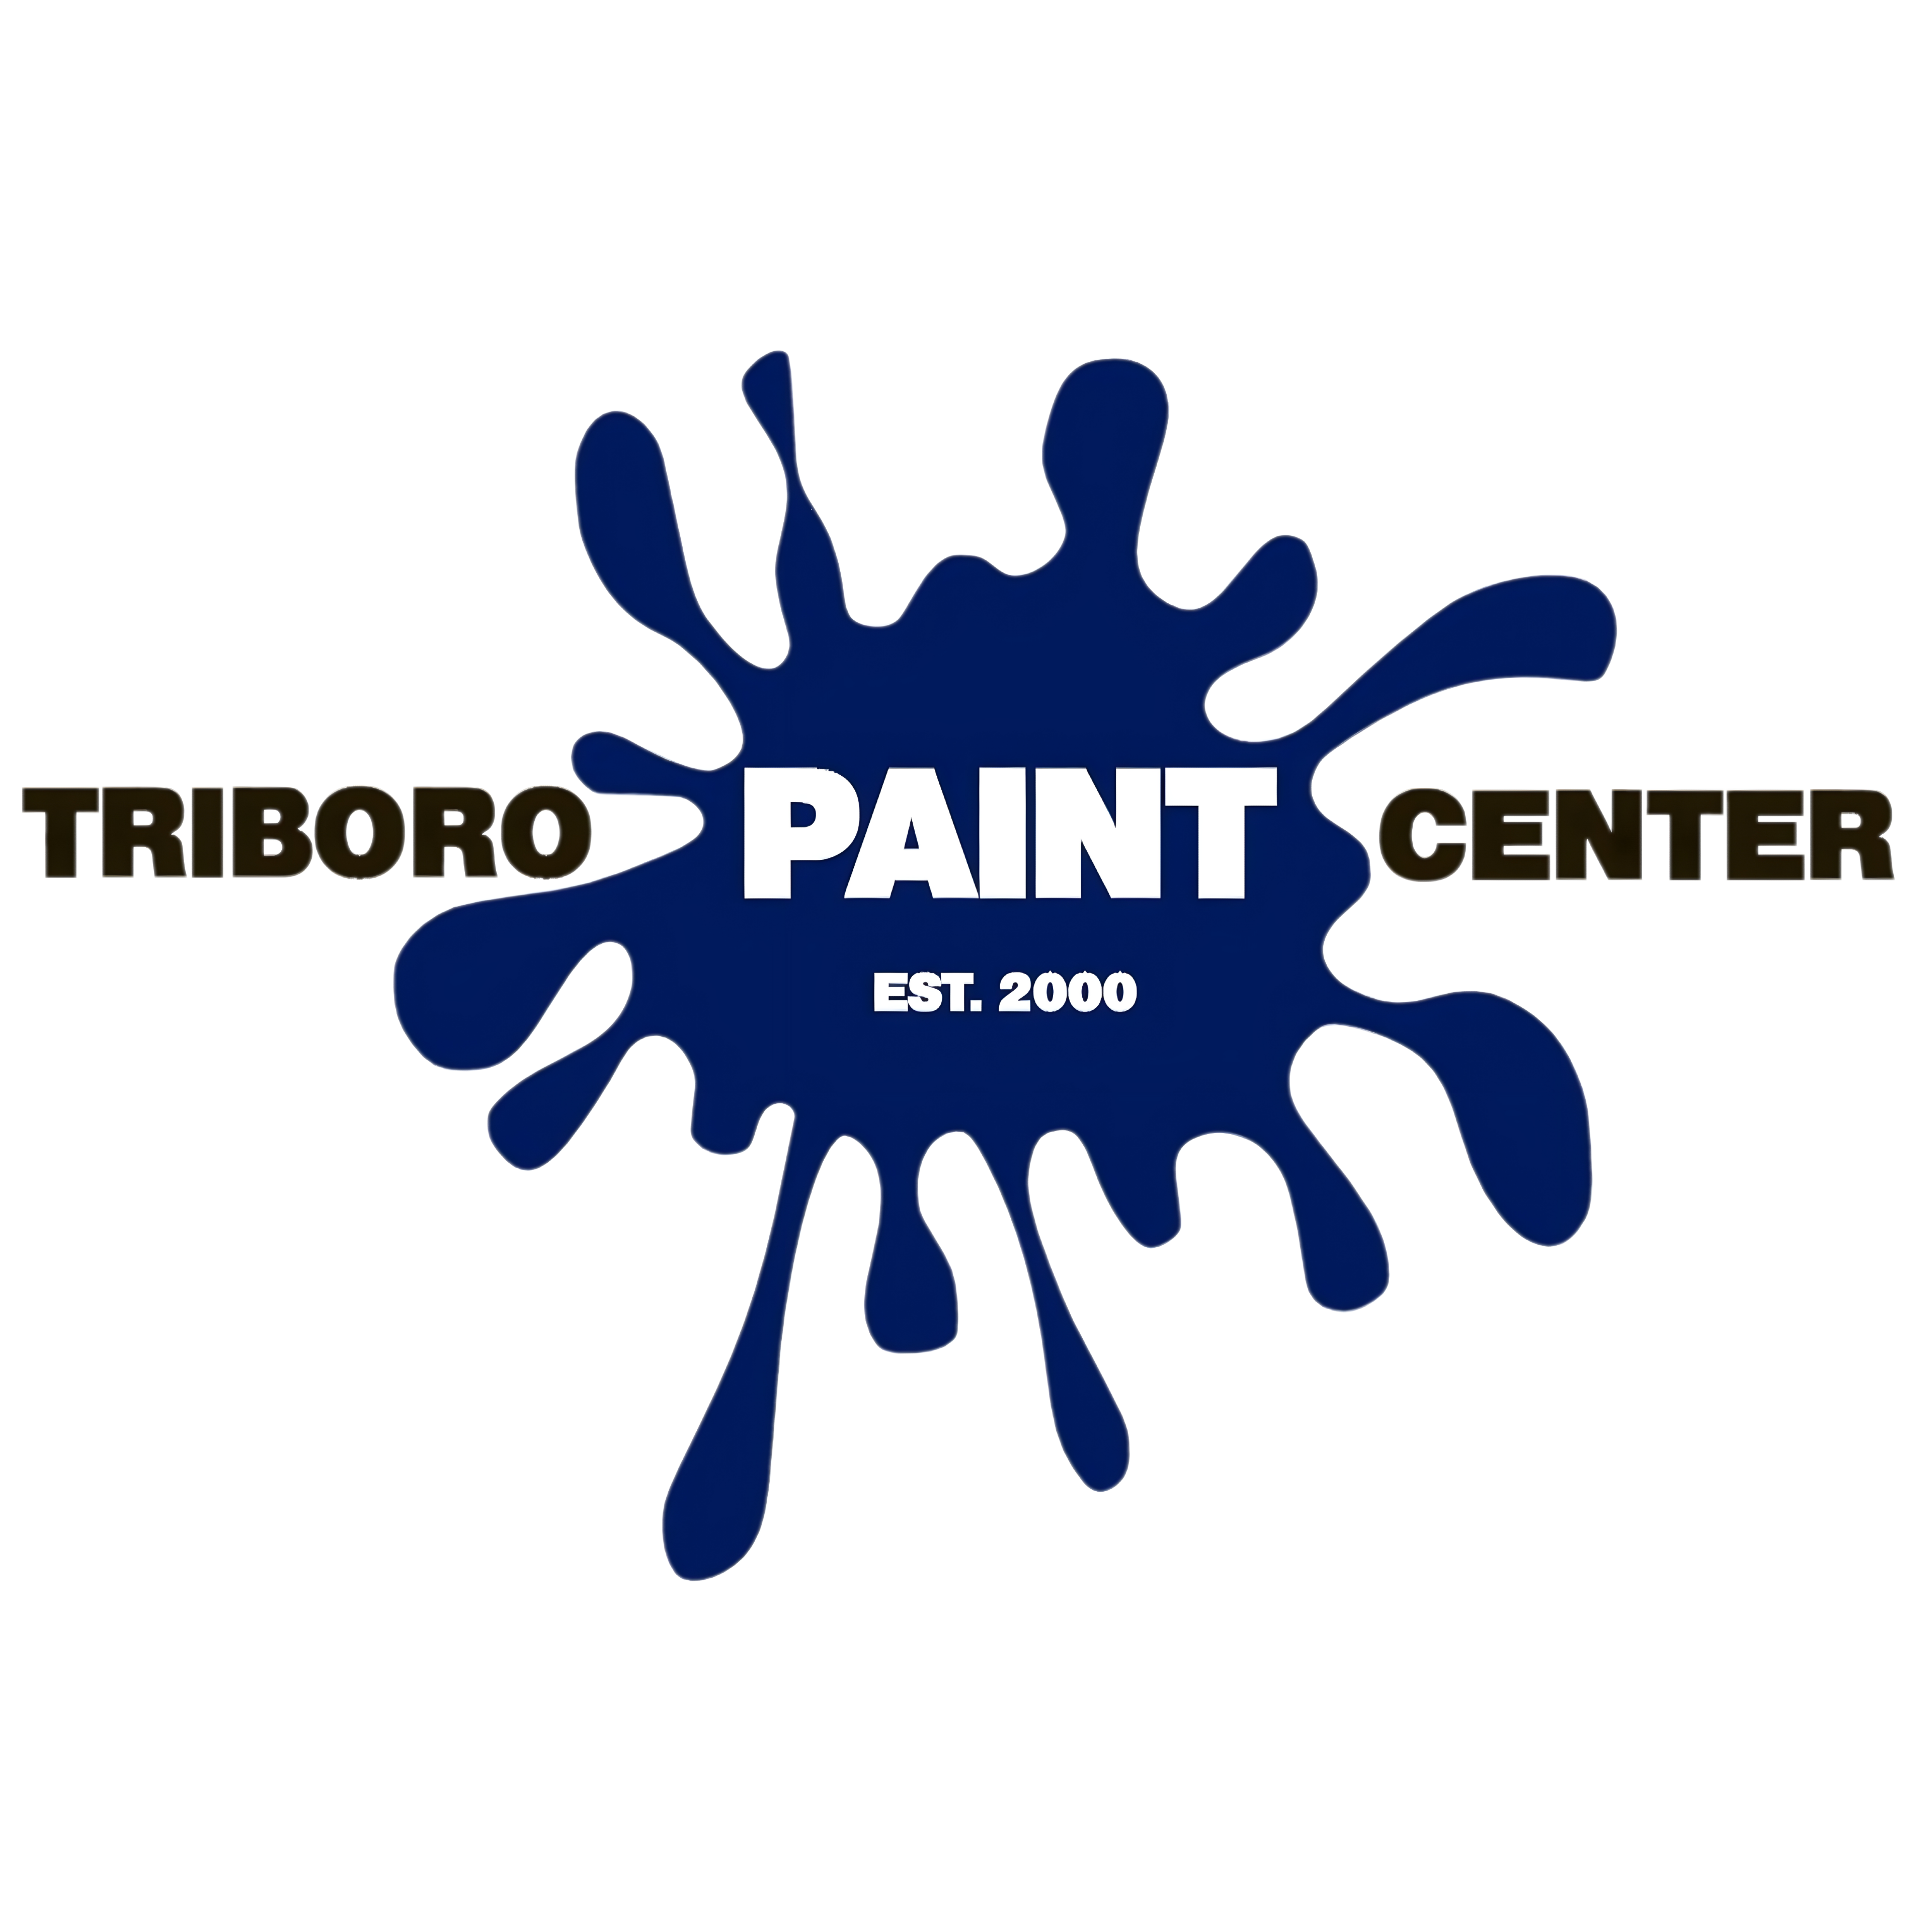 Triboro Paint Center Warwick (401)326-9600